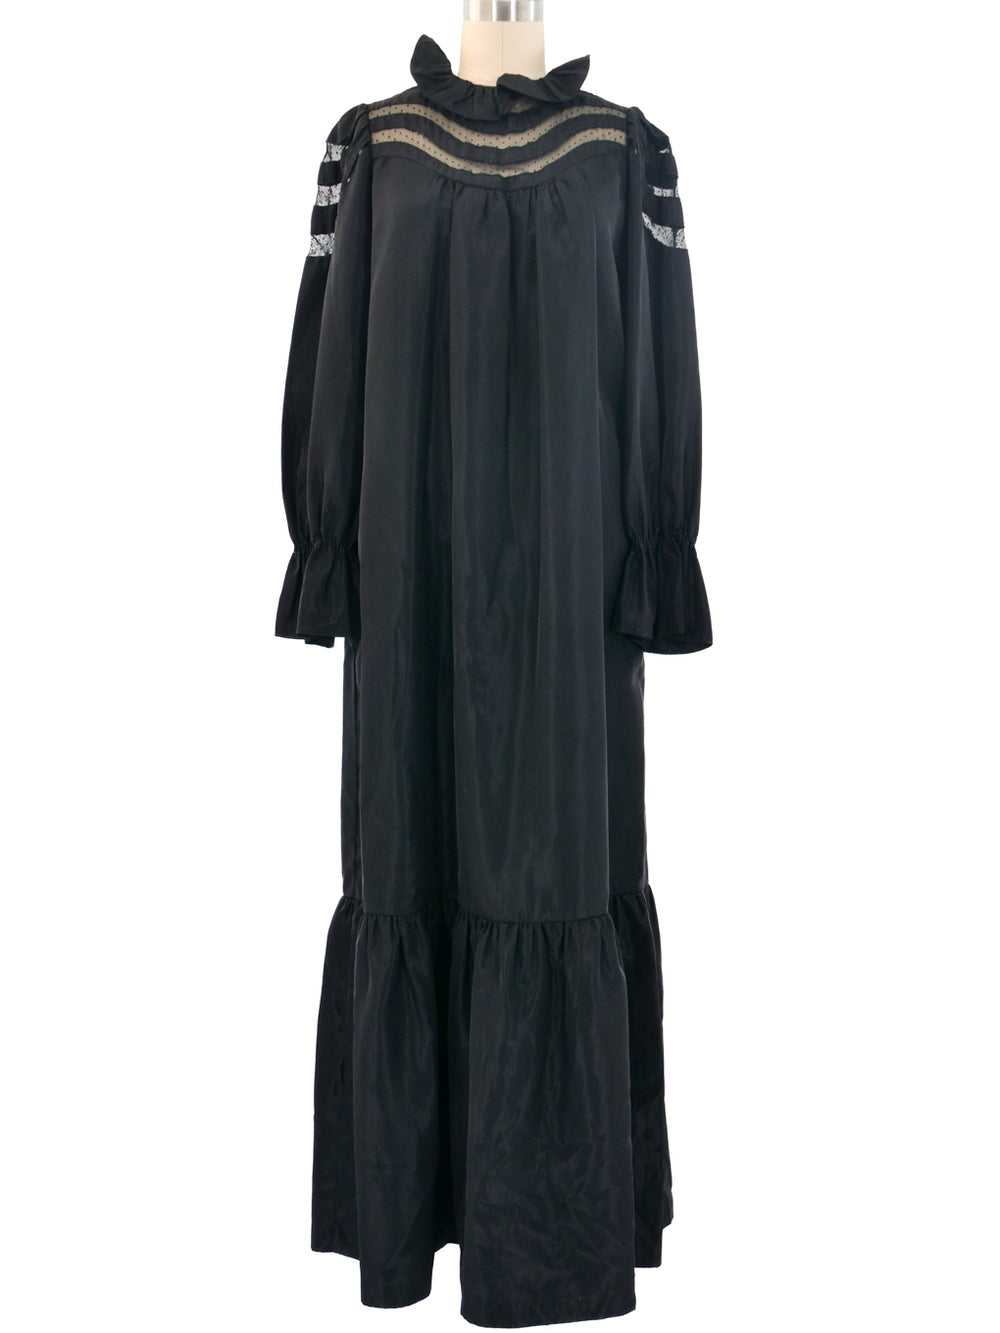 Christian Dior Taffeta Nightgown - image 2